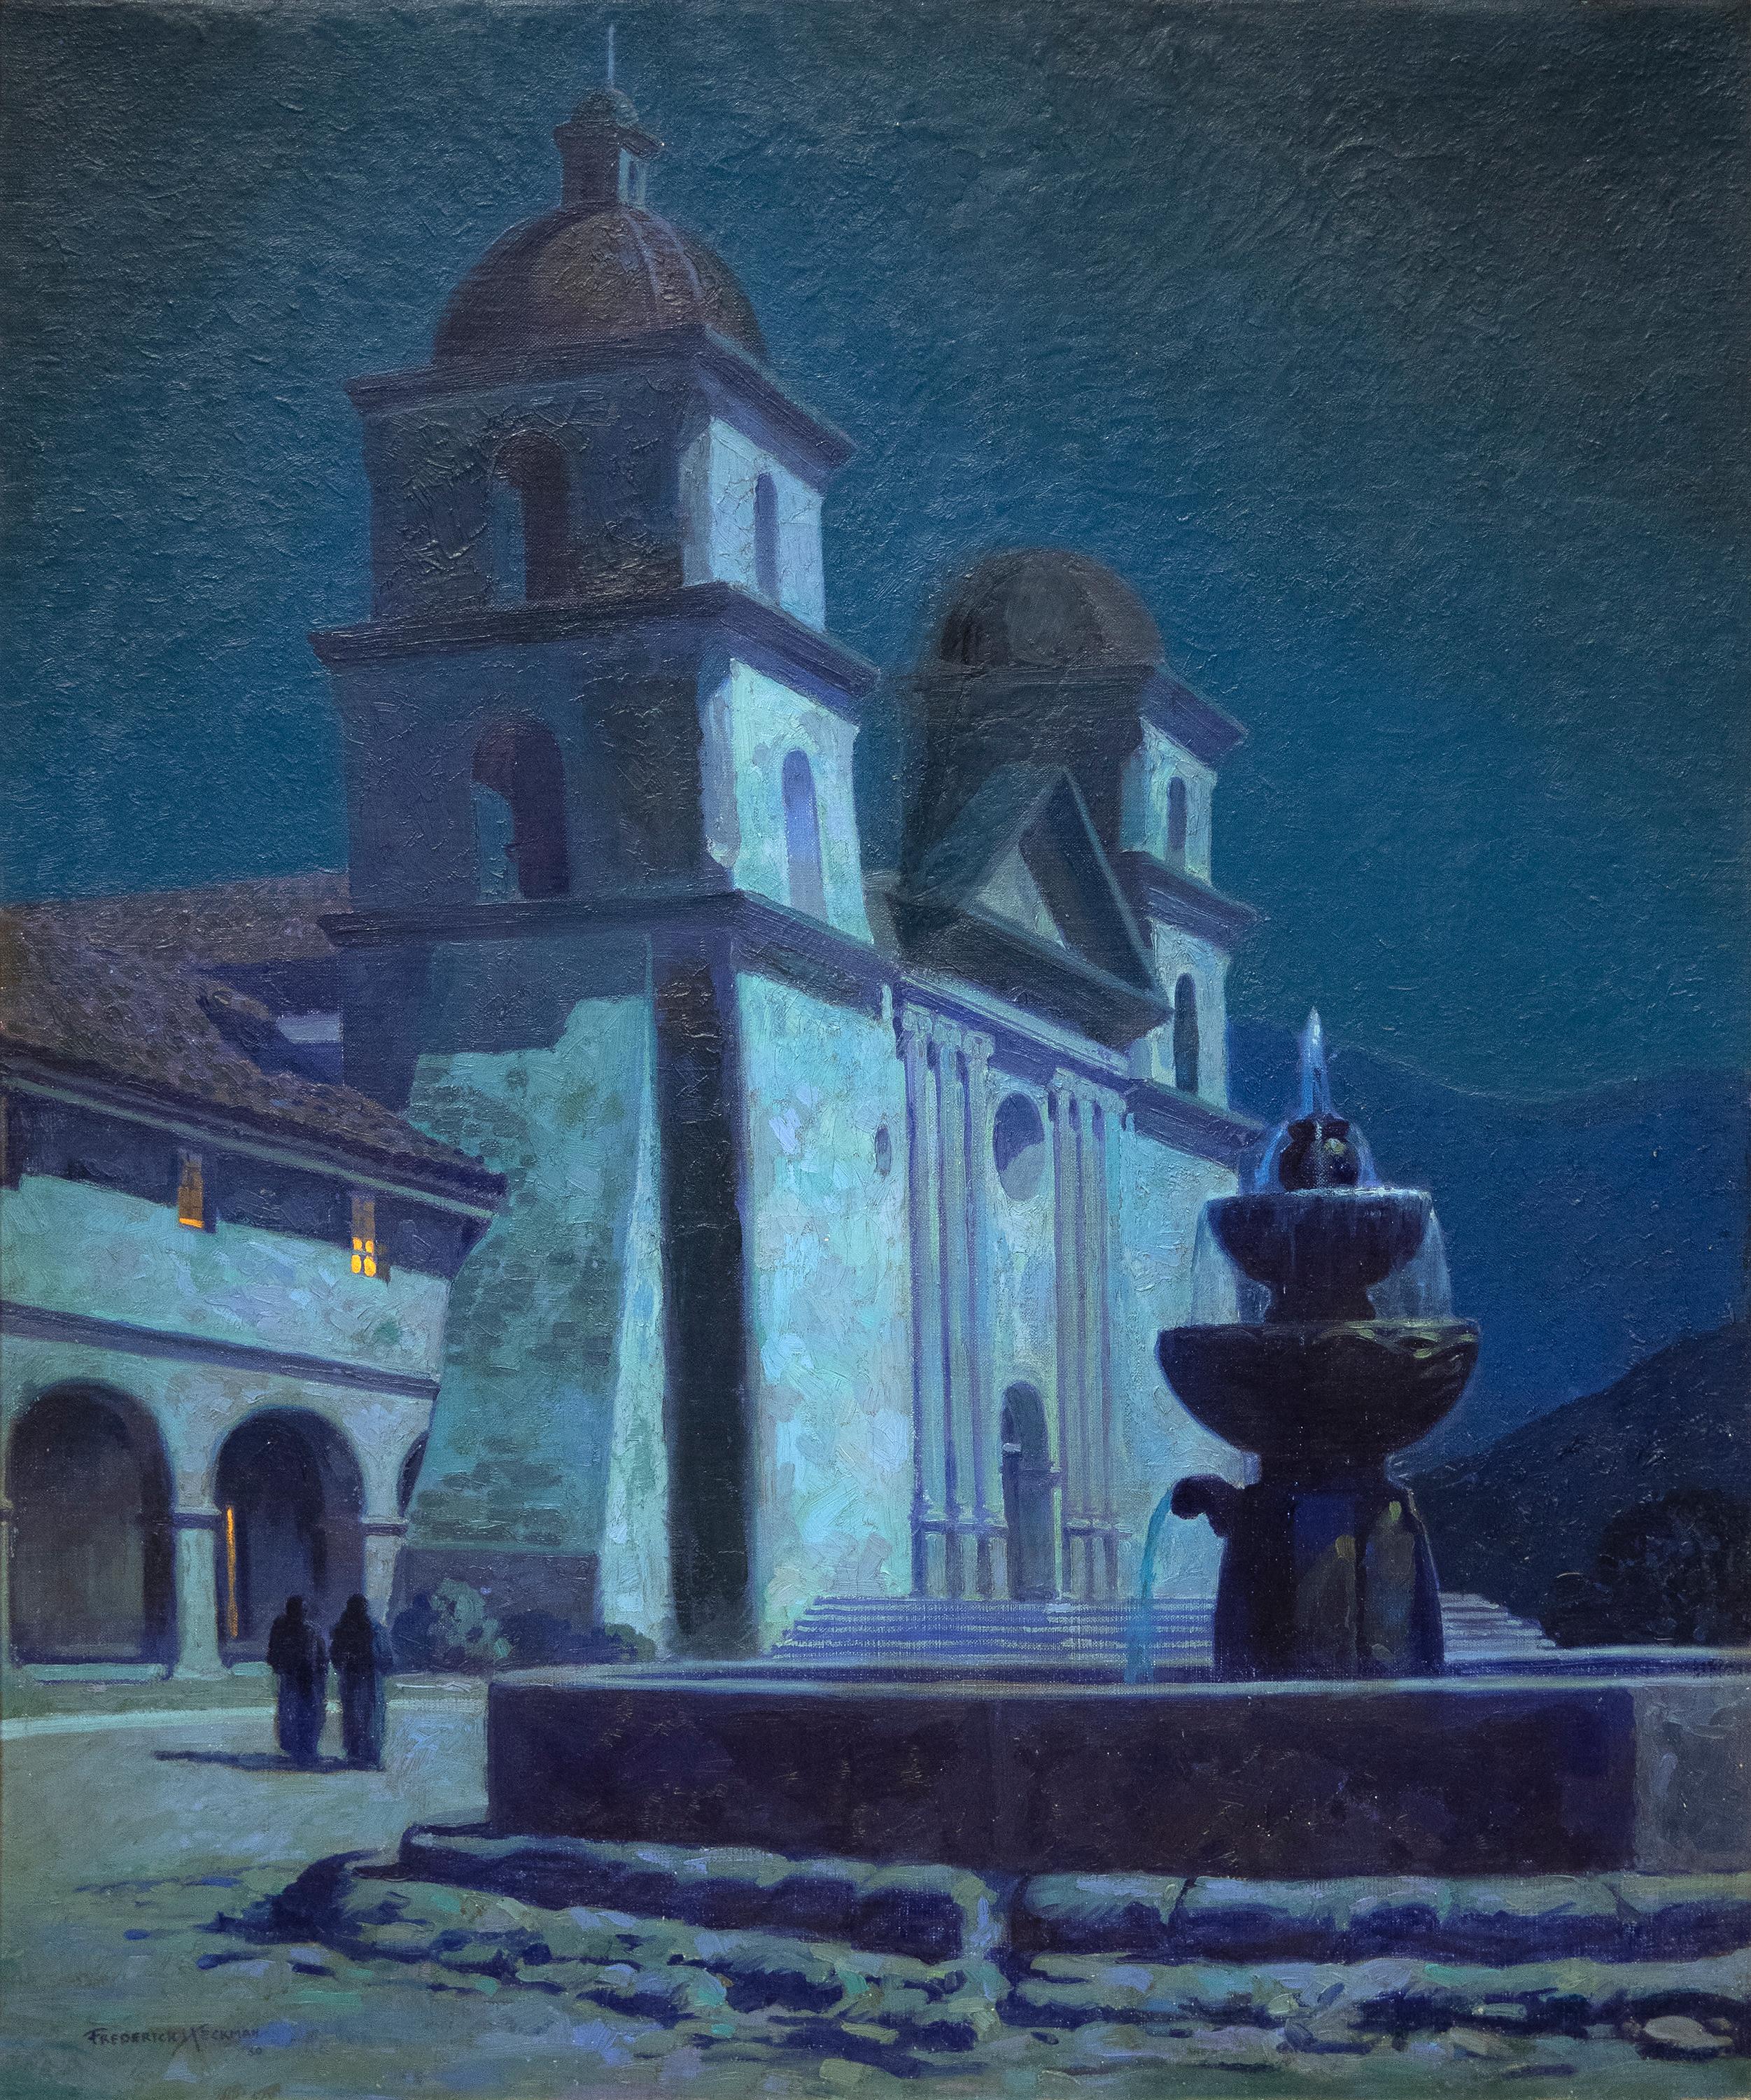 HECKMAN, RUEHL FREDERICK Landscape Painting - Santa Barbara Mission